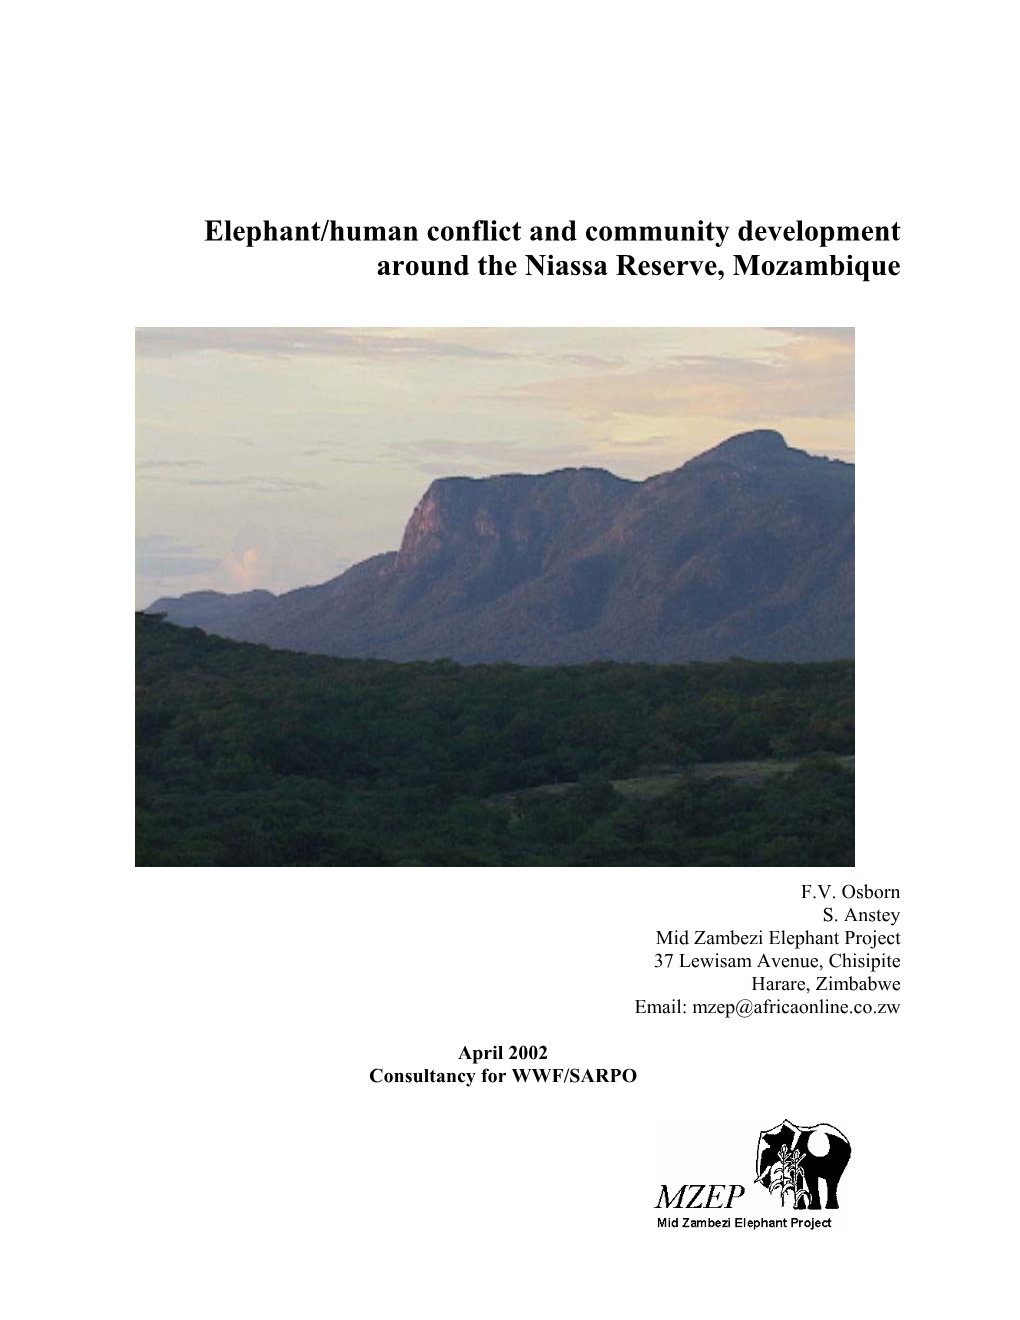 Elephant/Human Conflict and Community Development Around the Niassa Reserve, Mozambique